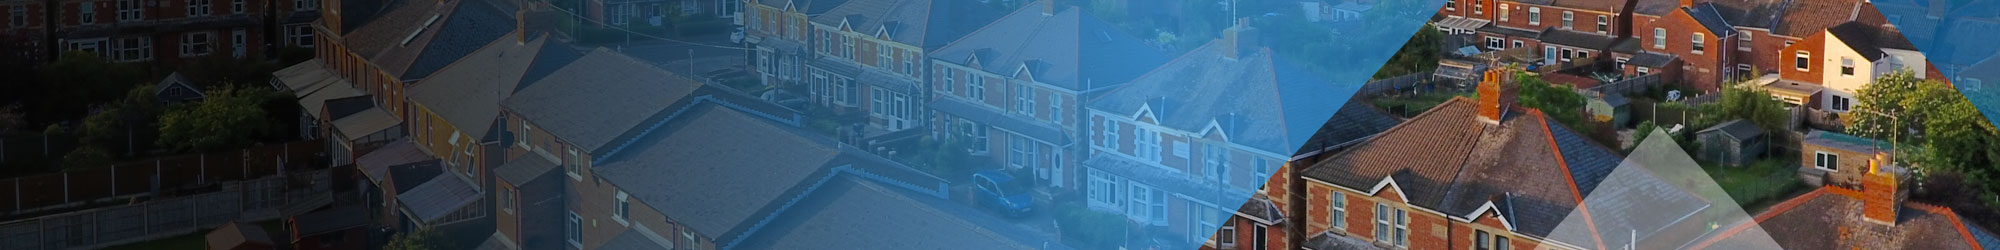 Range of UK rental properties